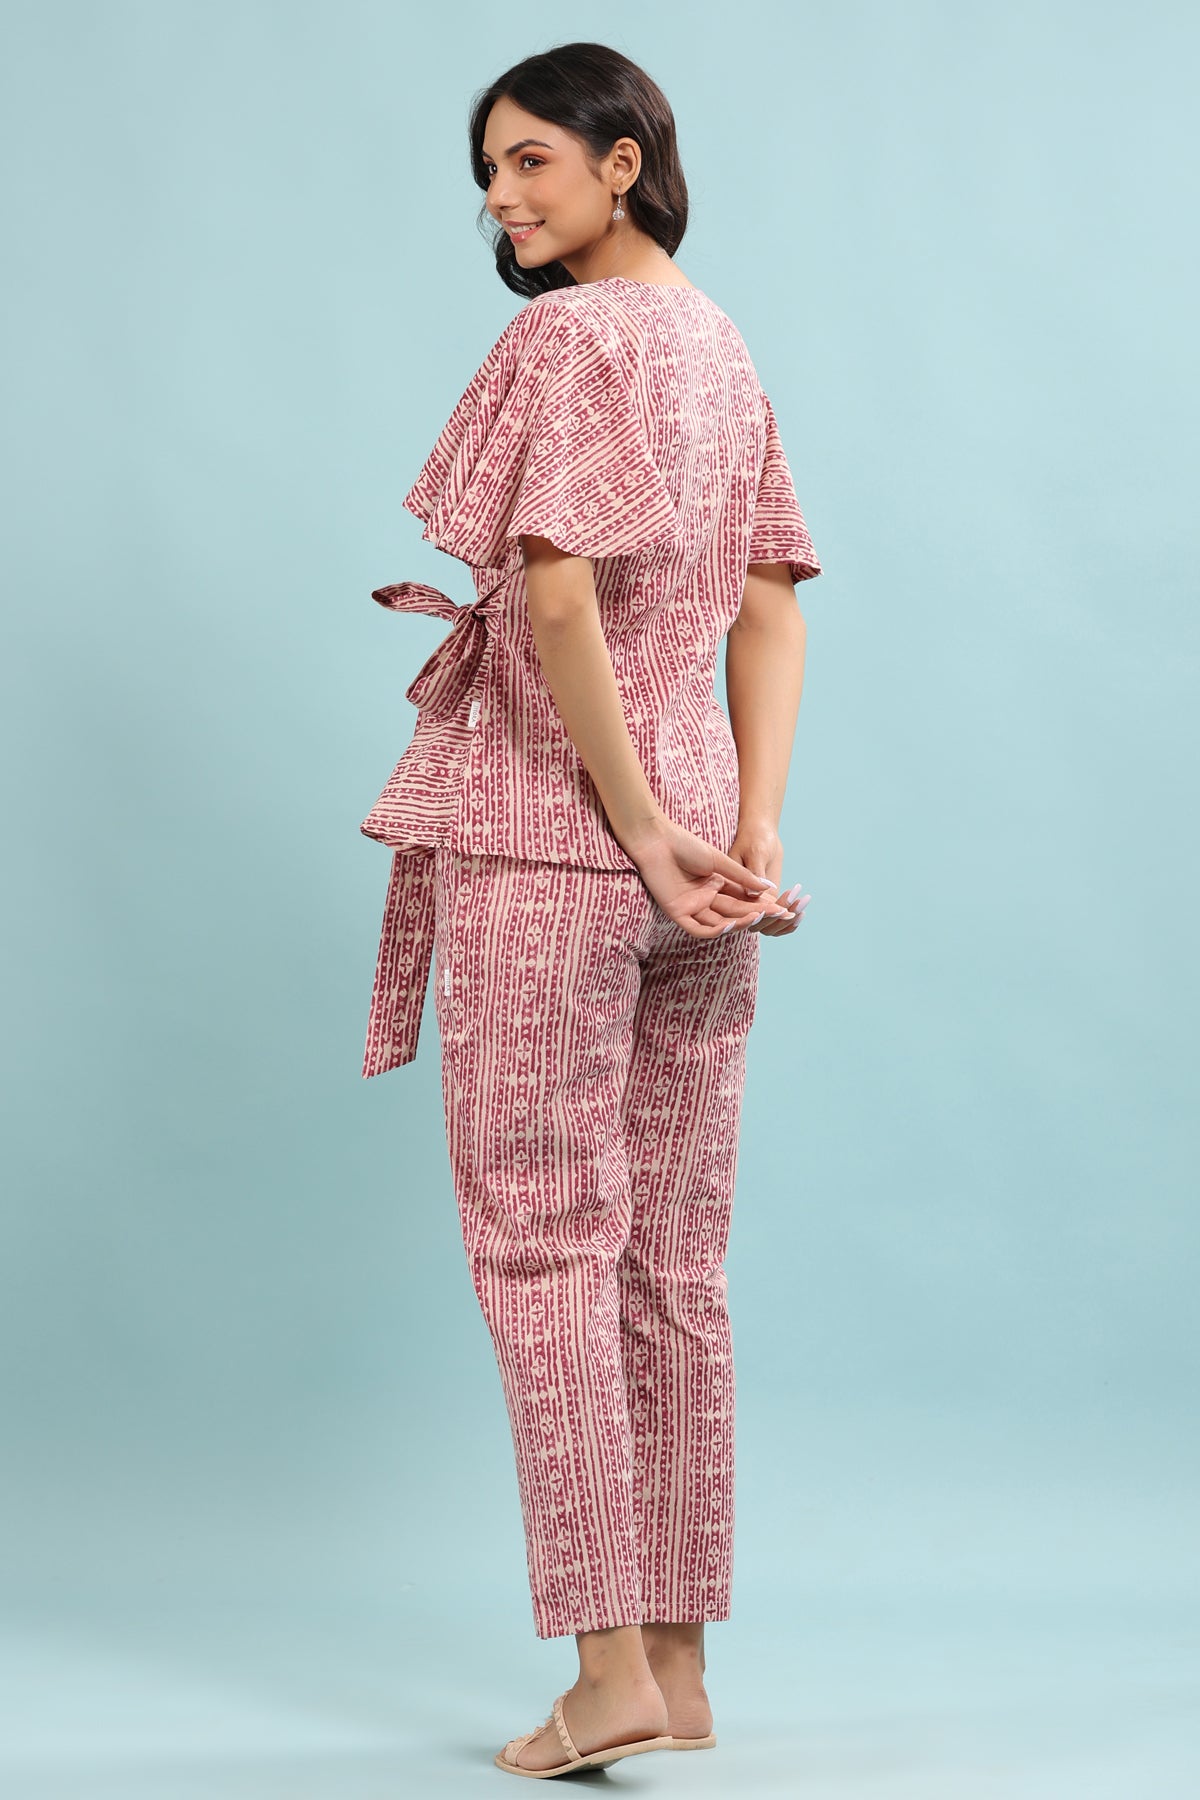 Patterned Print On Pink Loungewear Set